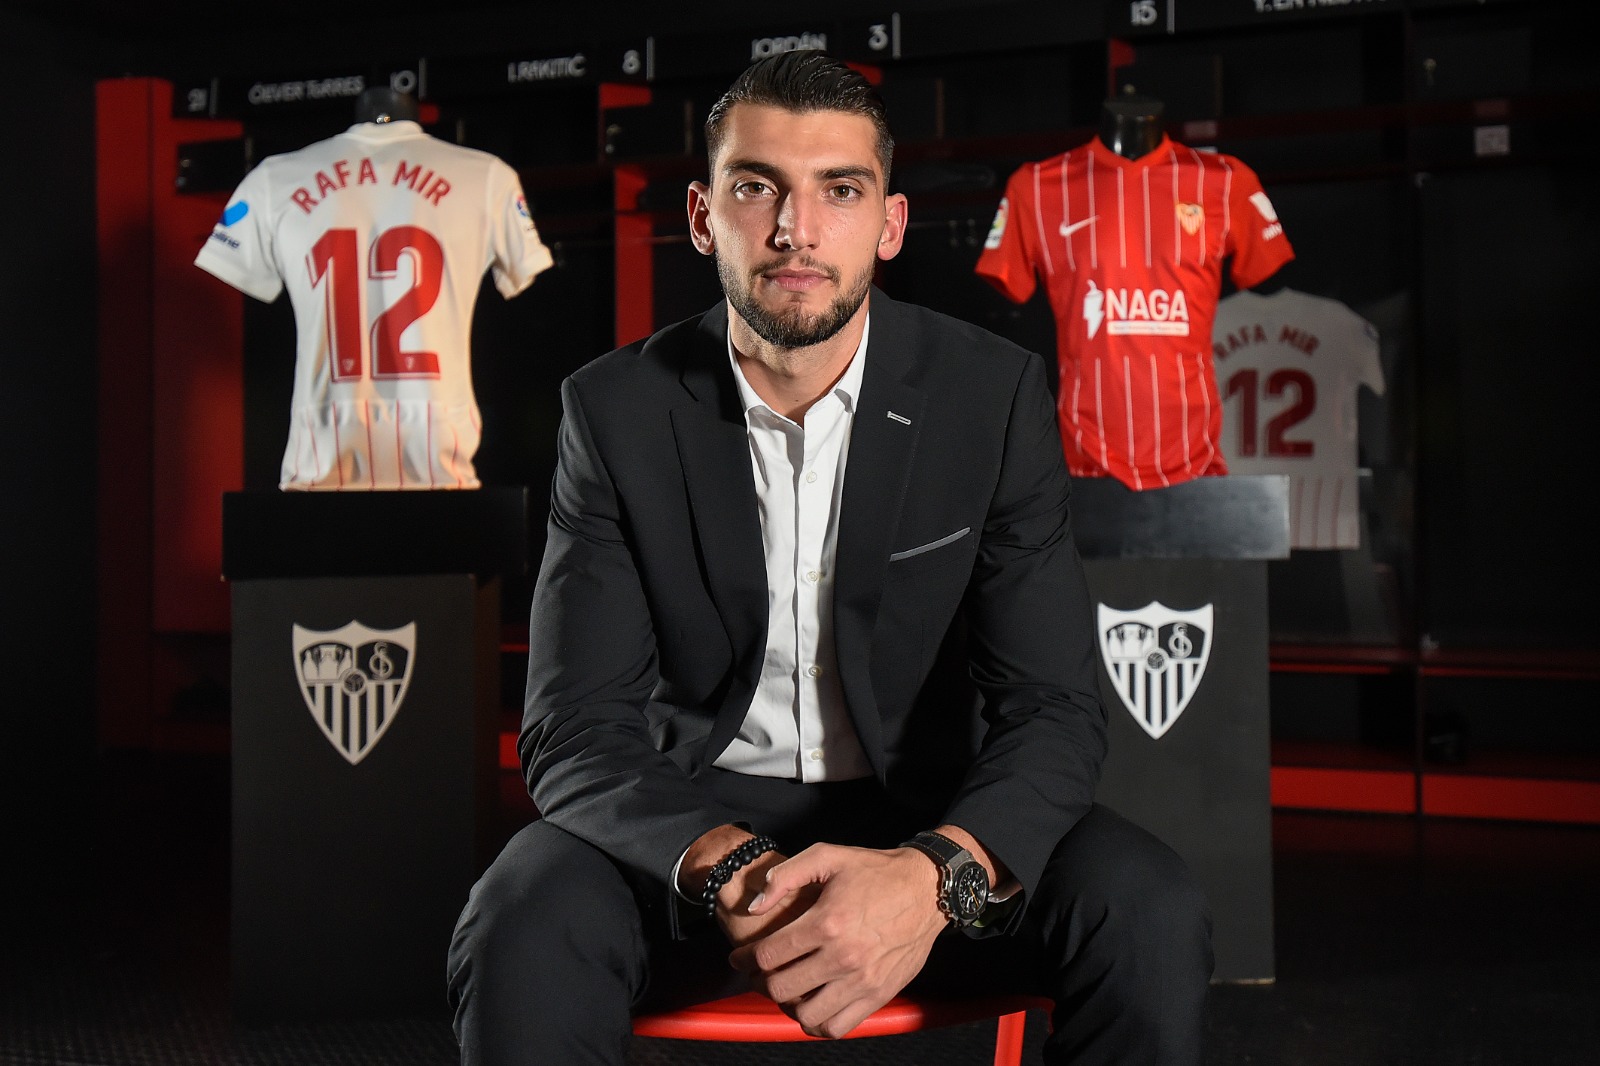 Lío Saludar Espectador Rafa Mir: "Sevilla es el sitio ideal" | Sevilla FC